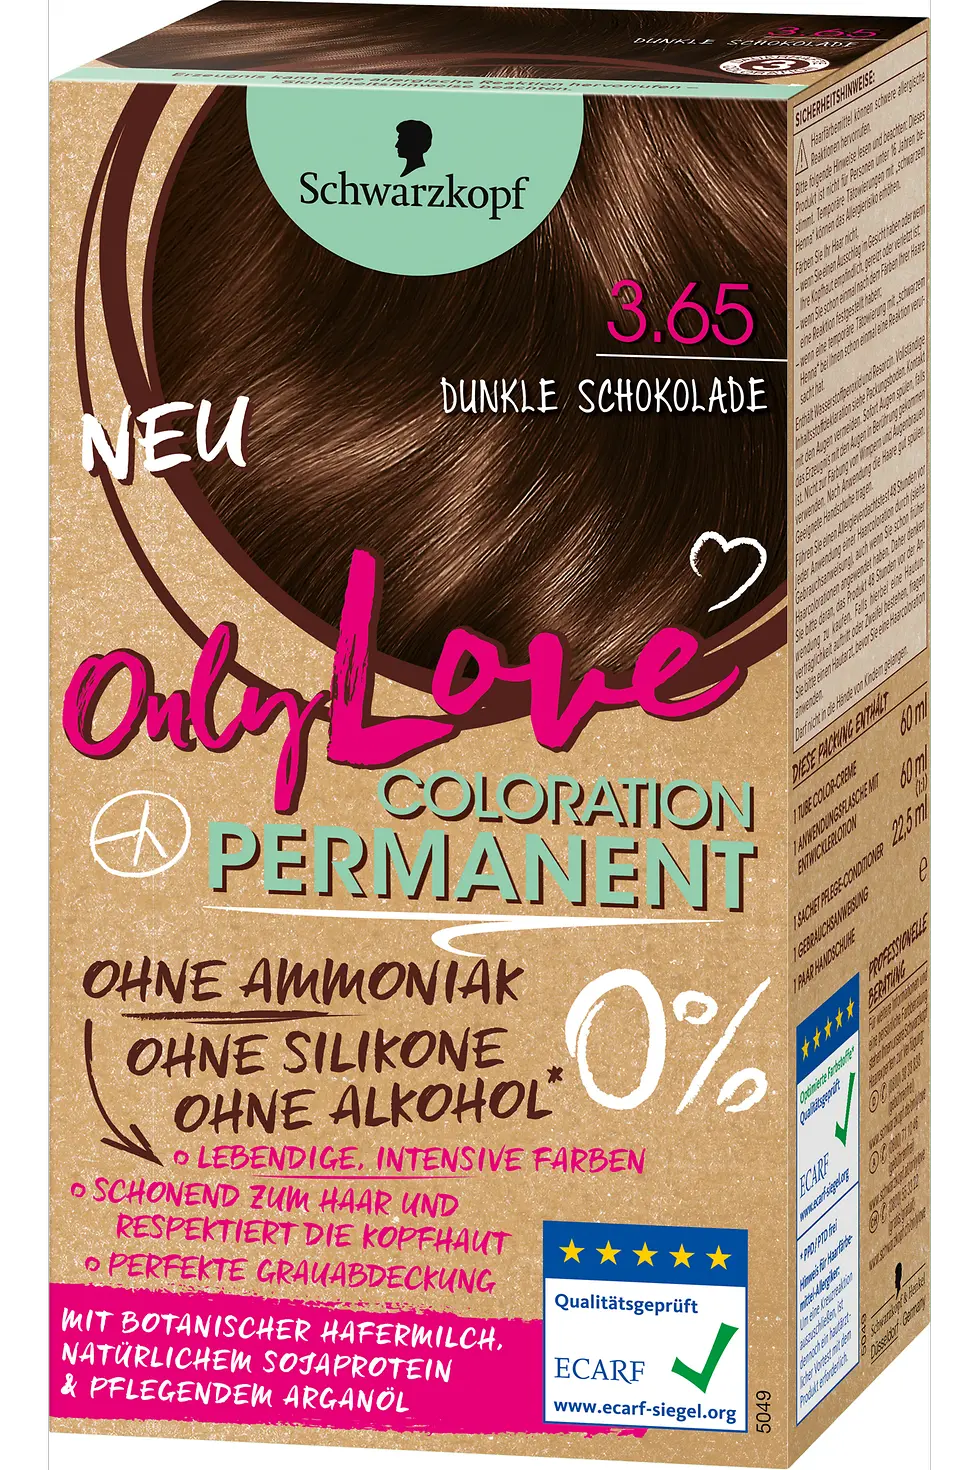 Only Love Dunkle Schokolade 3.65